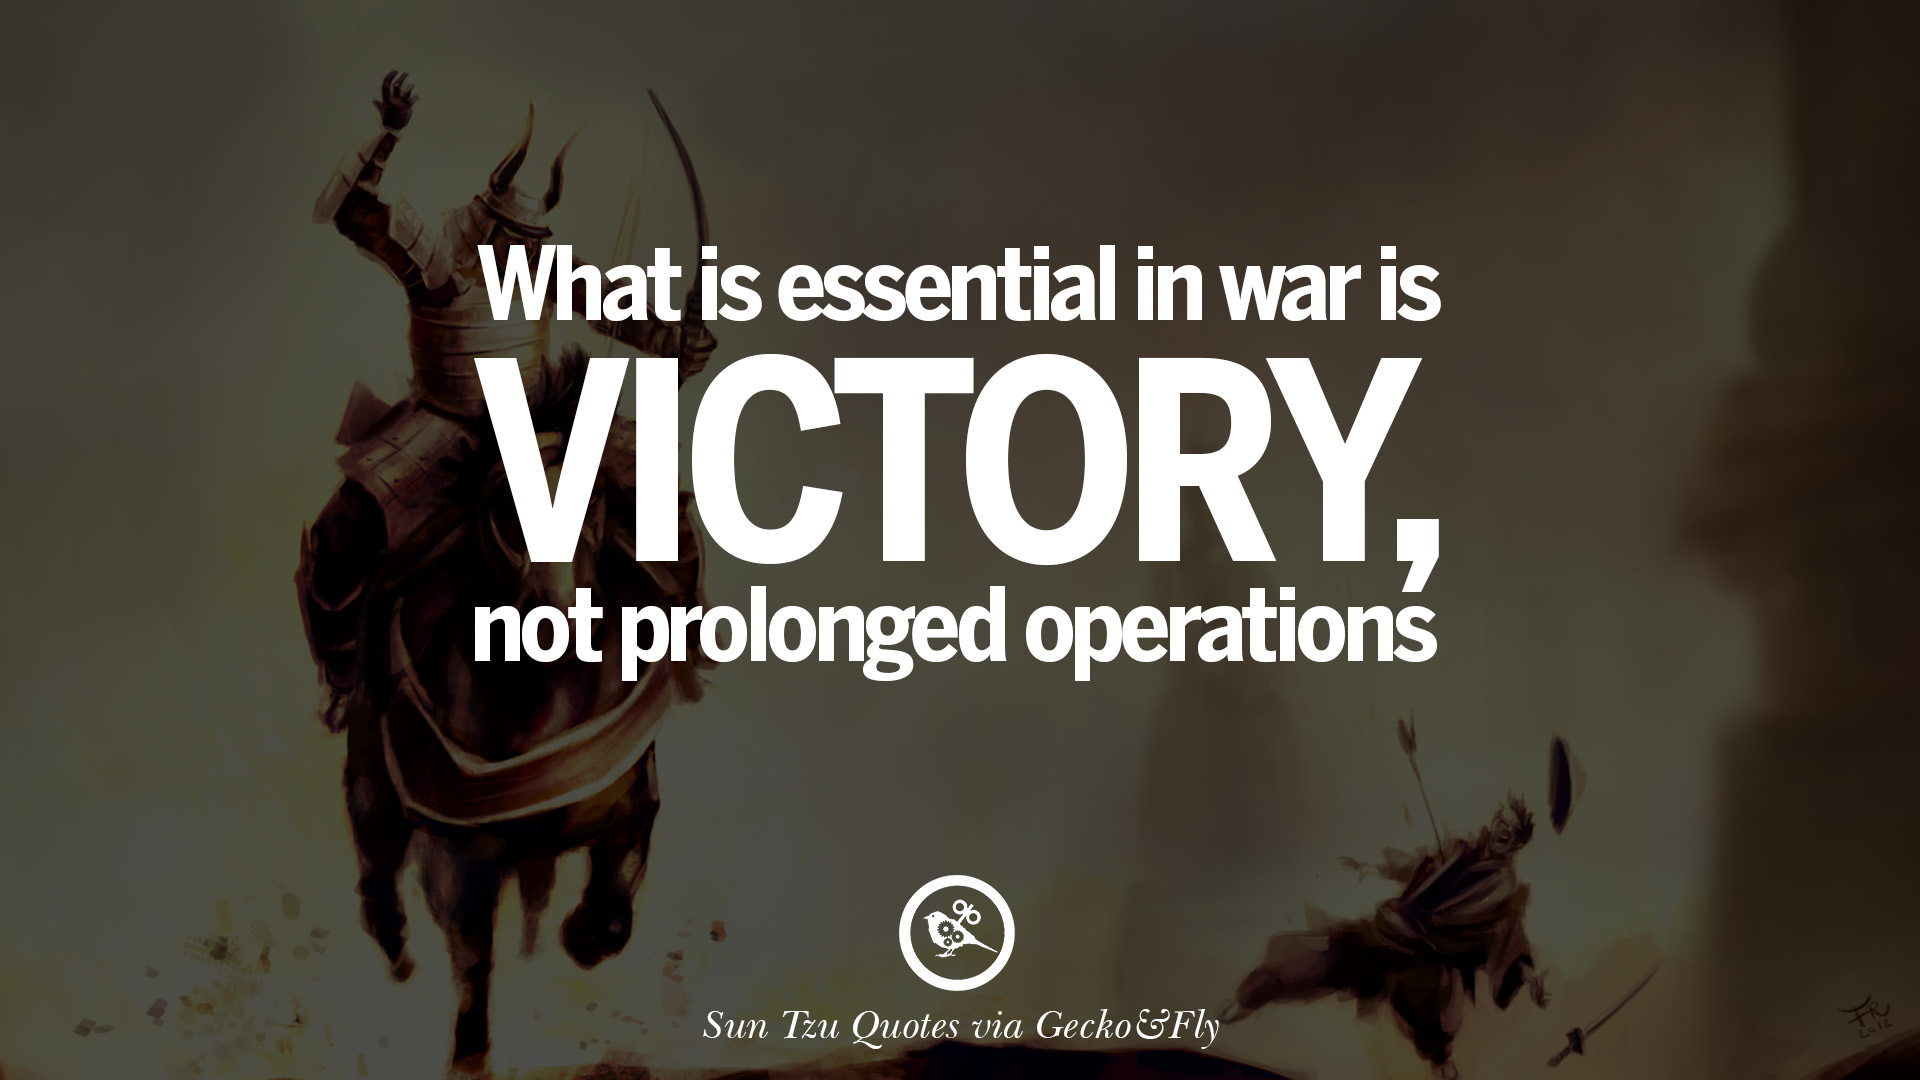 Sun Tzu Quotes Art Of War Posters13 